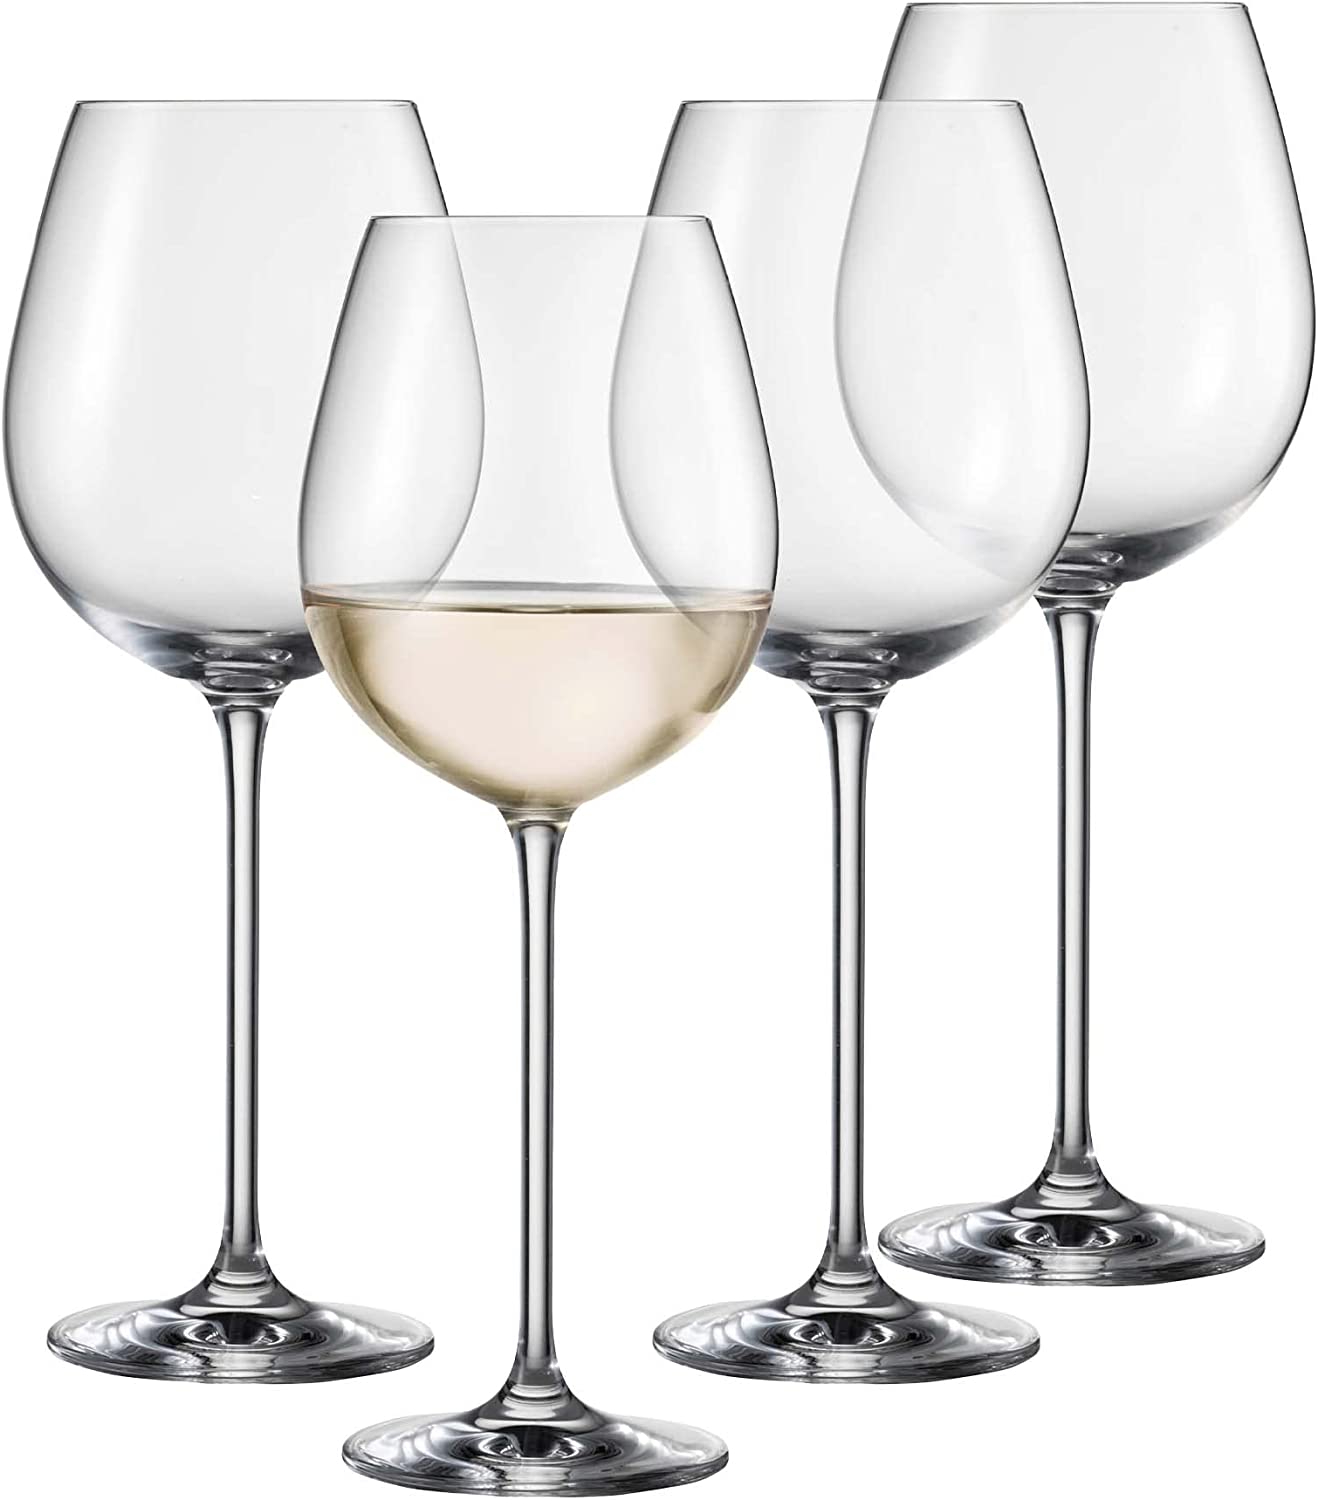 Schott Zwiesel Vinos White Wine Glasses (Set of 4), Gracial Wine Glasses for White Wine, Dishwasher Safe Tritan Crystal Glasses, Made in Germany (Item No. 130012)